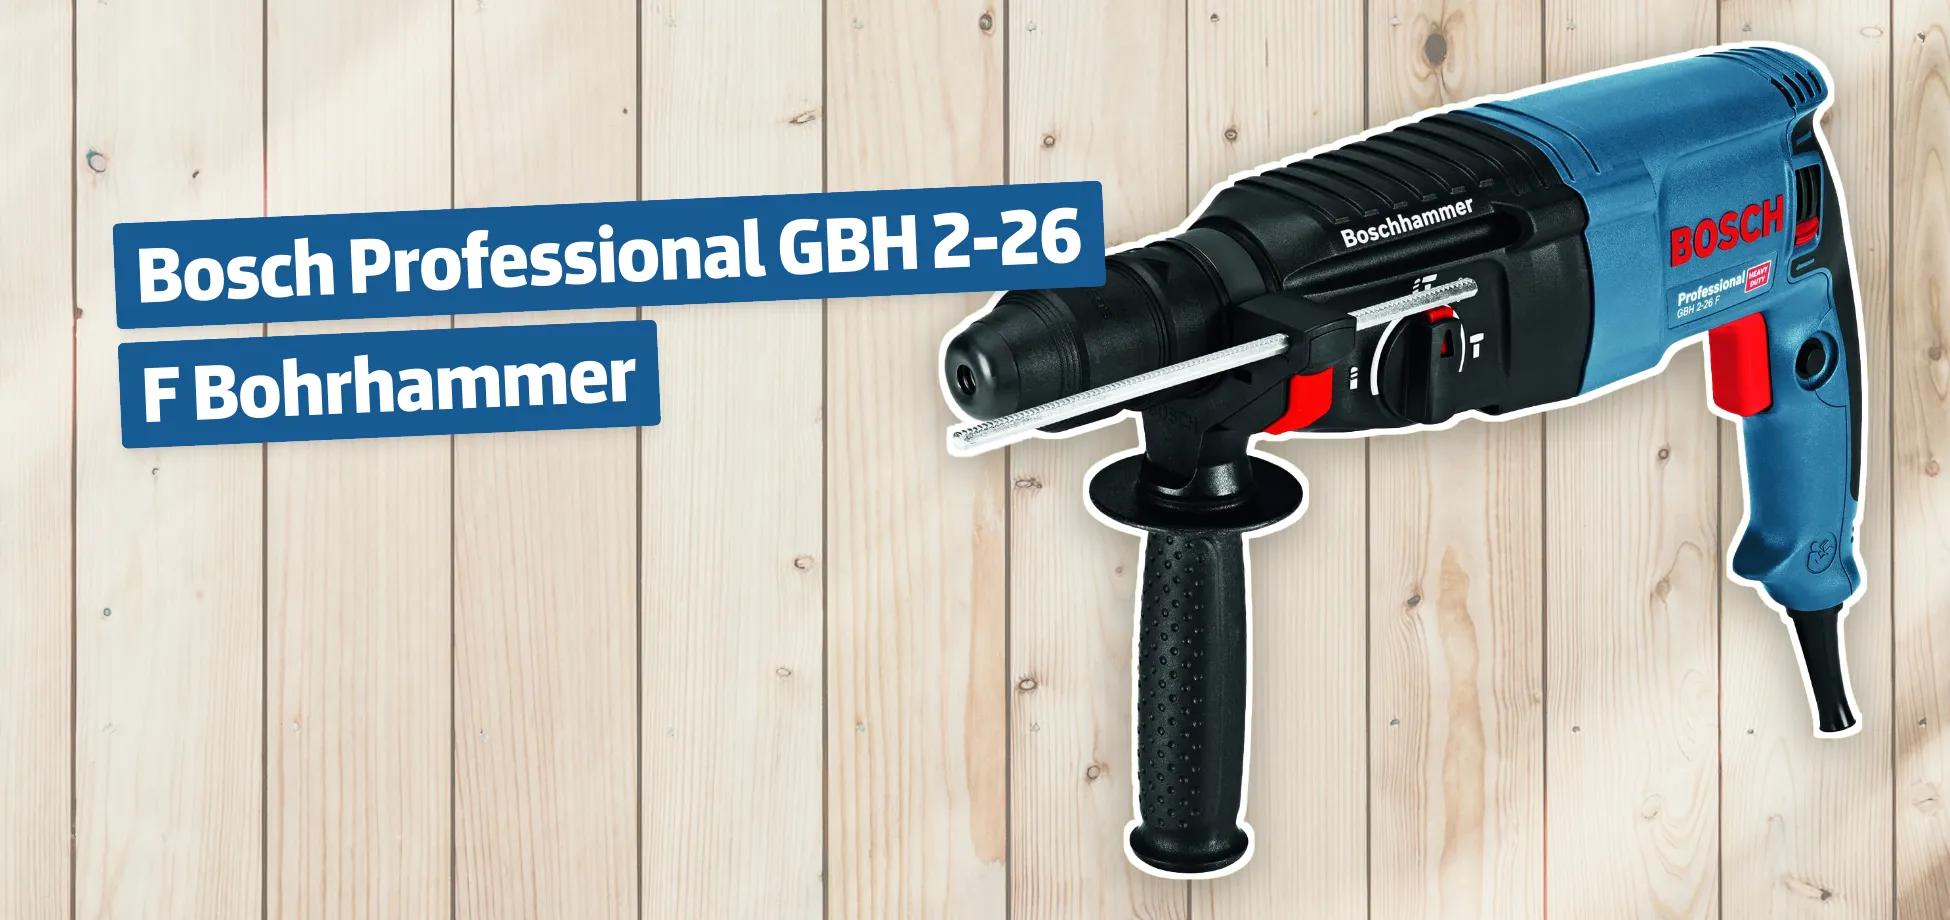 Bosch Professional GBH 2-26 F Bohrhammer